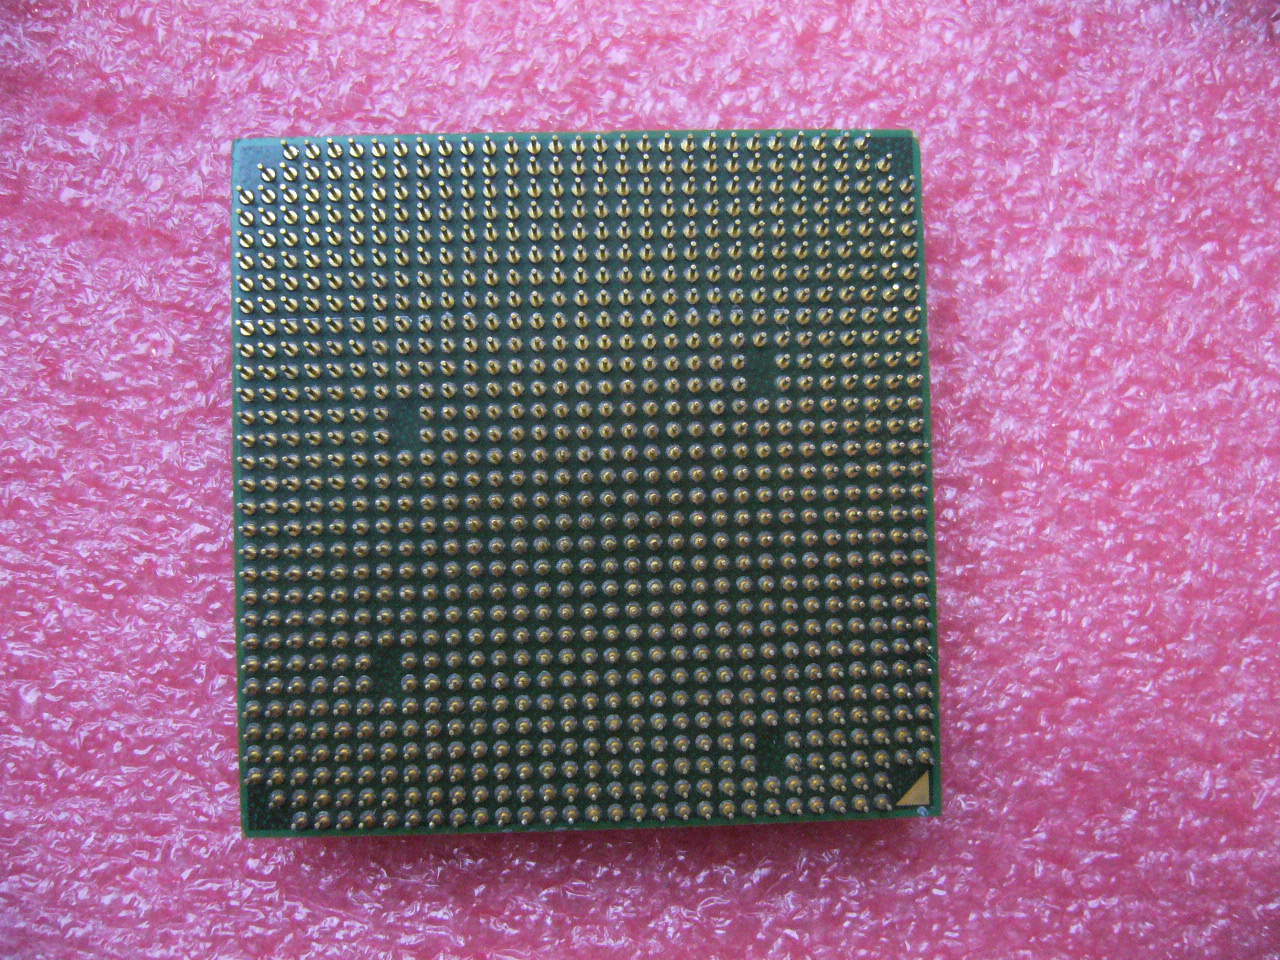 QTY 1x AMD Phenom X4 9950 2.6 GHz Quad-Core (HD995ZFAJ4BGH) CPU Socket AM2+ - Click Image to Close